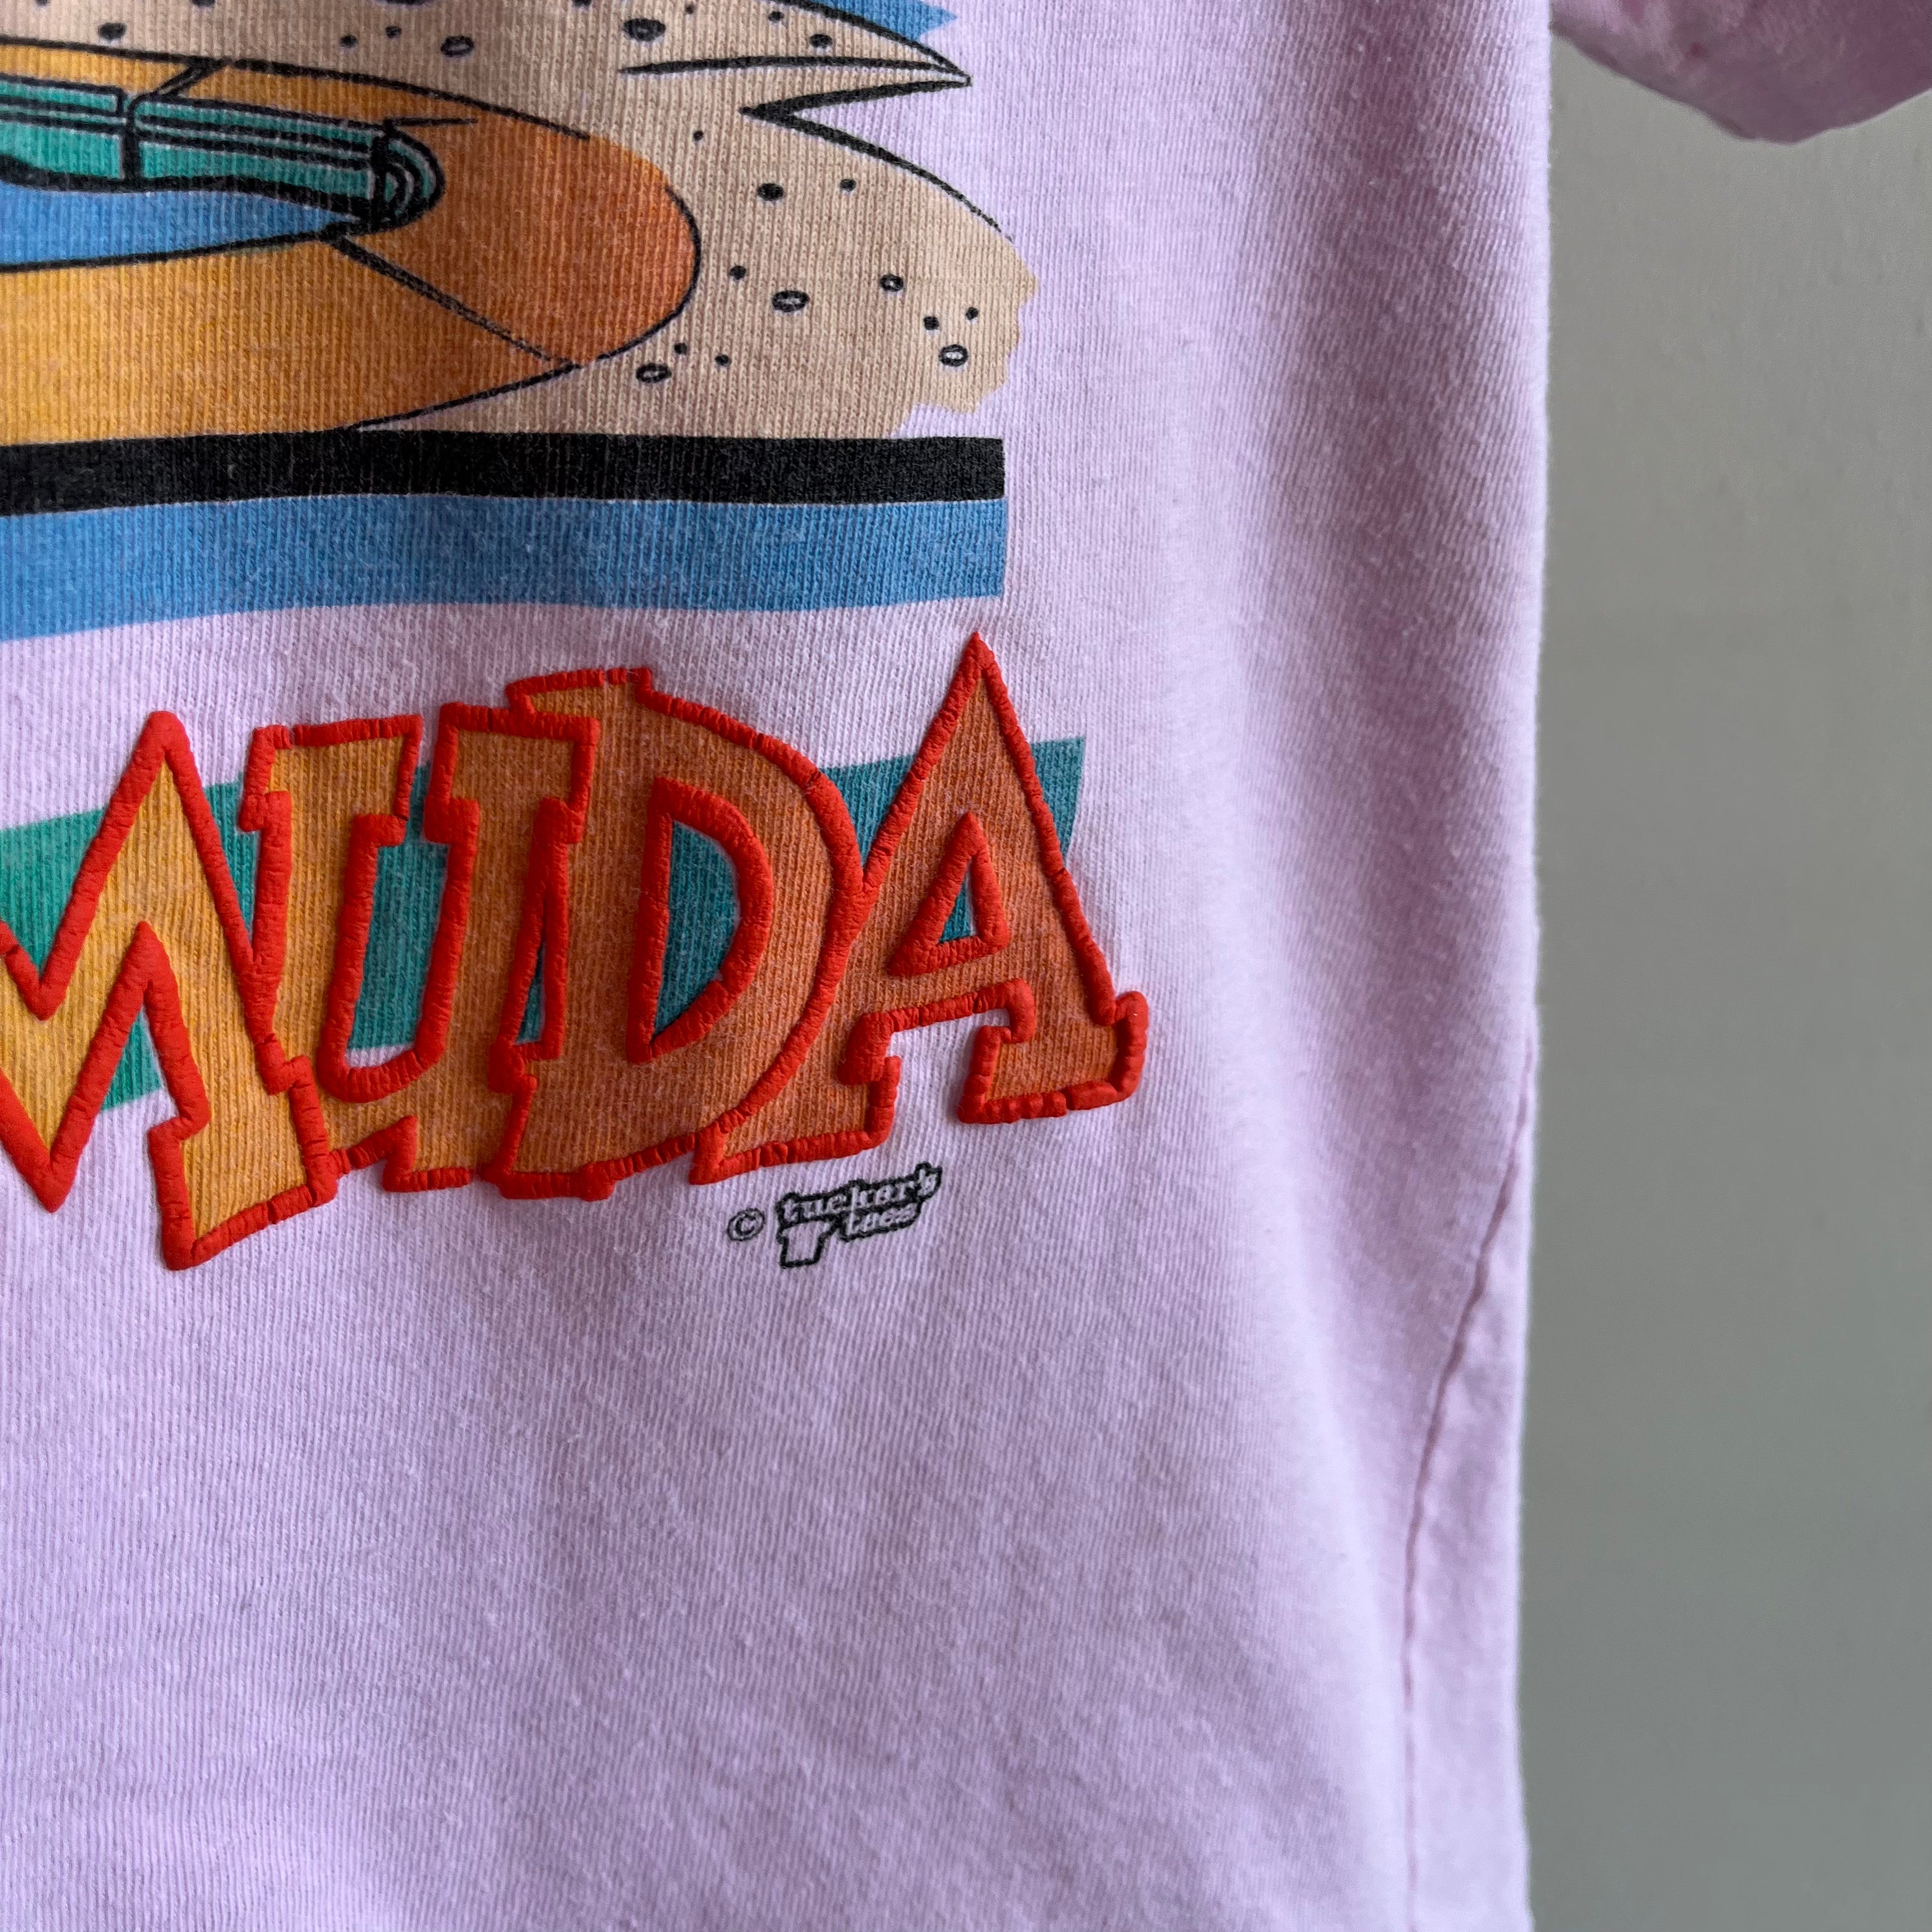 1980s Club Bermuda Rad Tourist T-Shirt